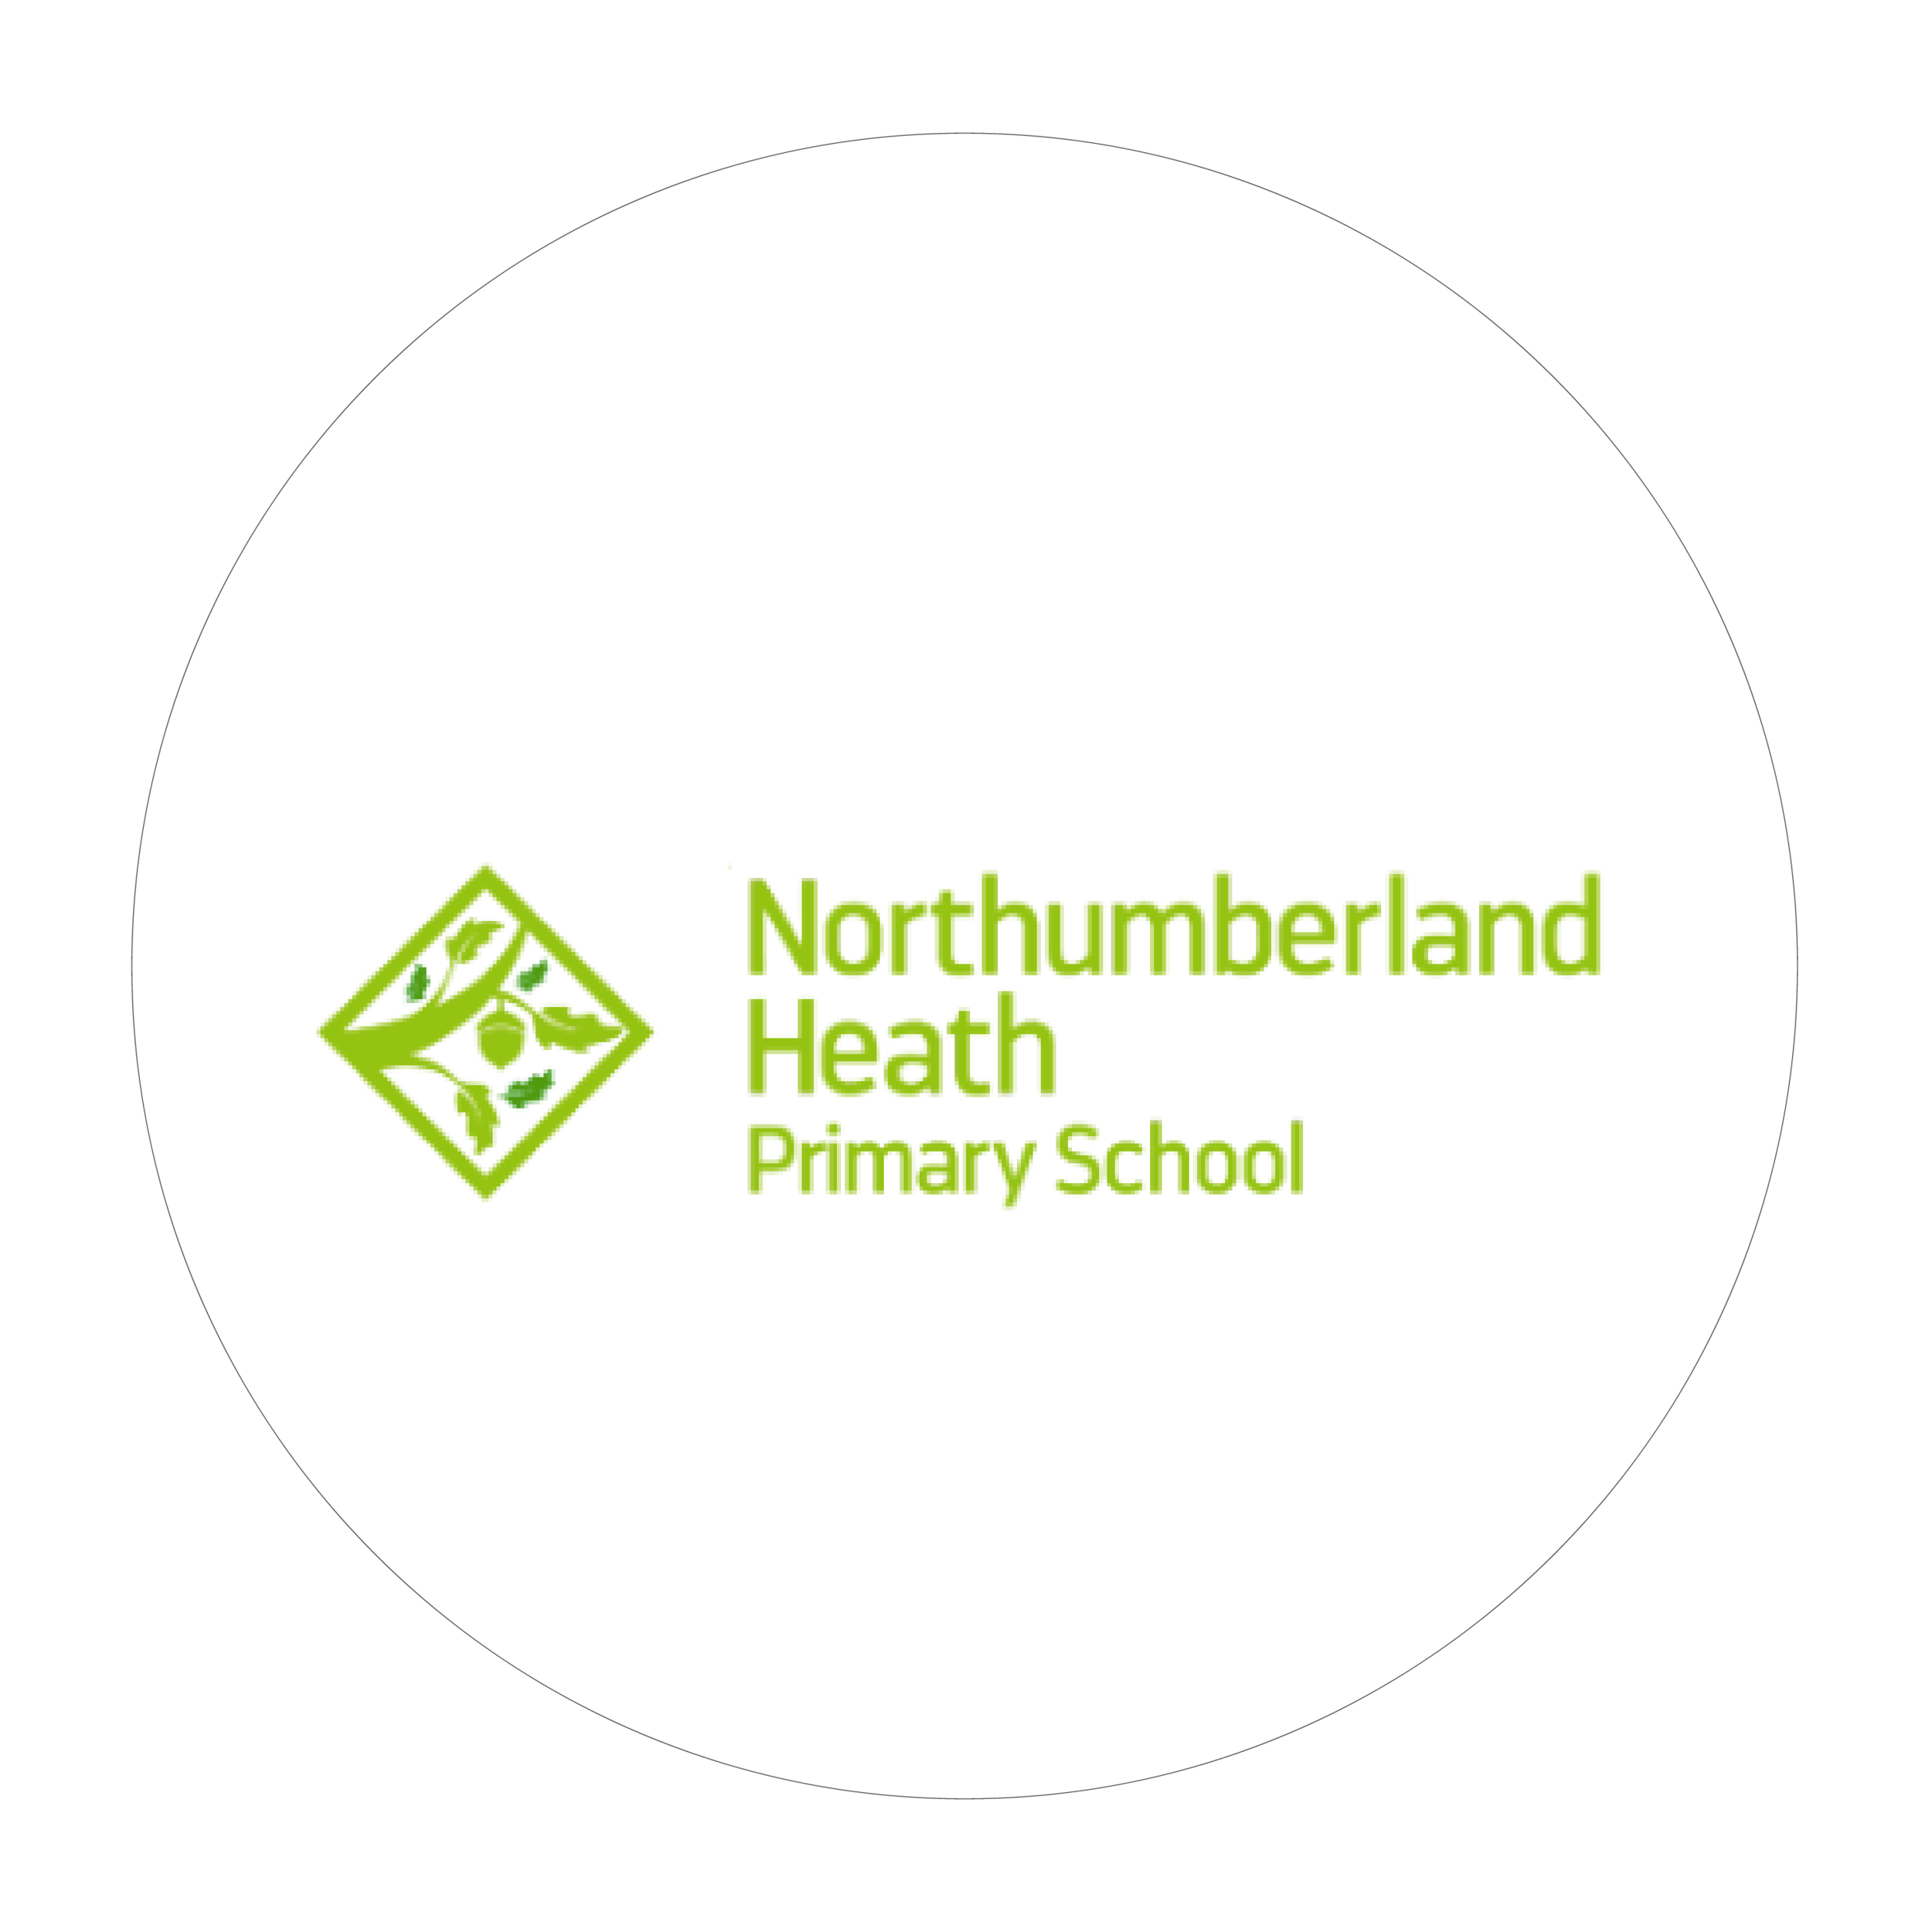 Northumberland Heath Primary School